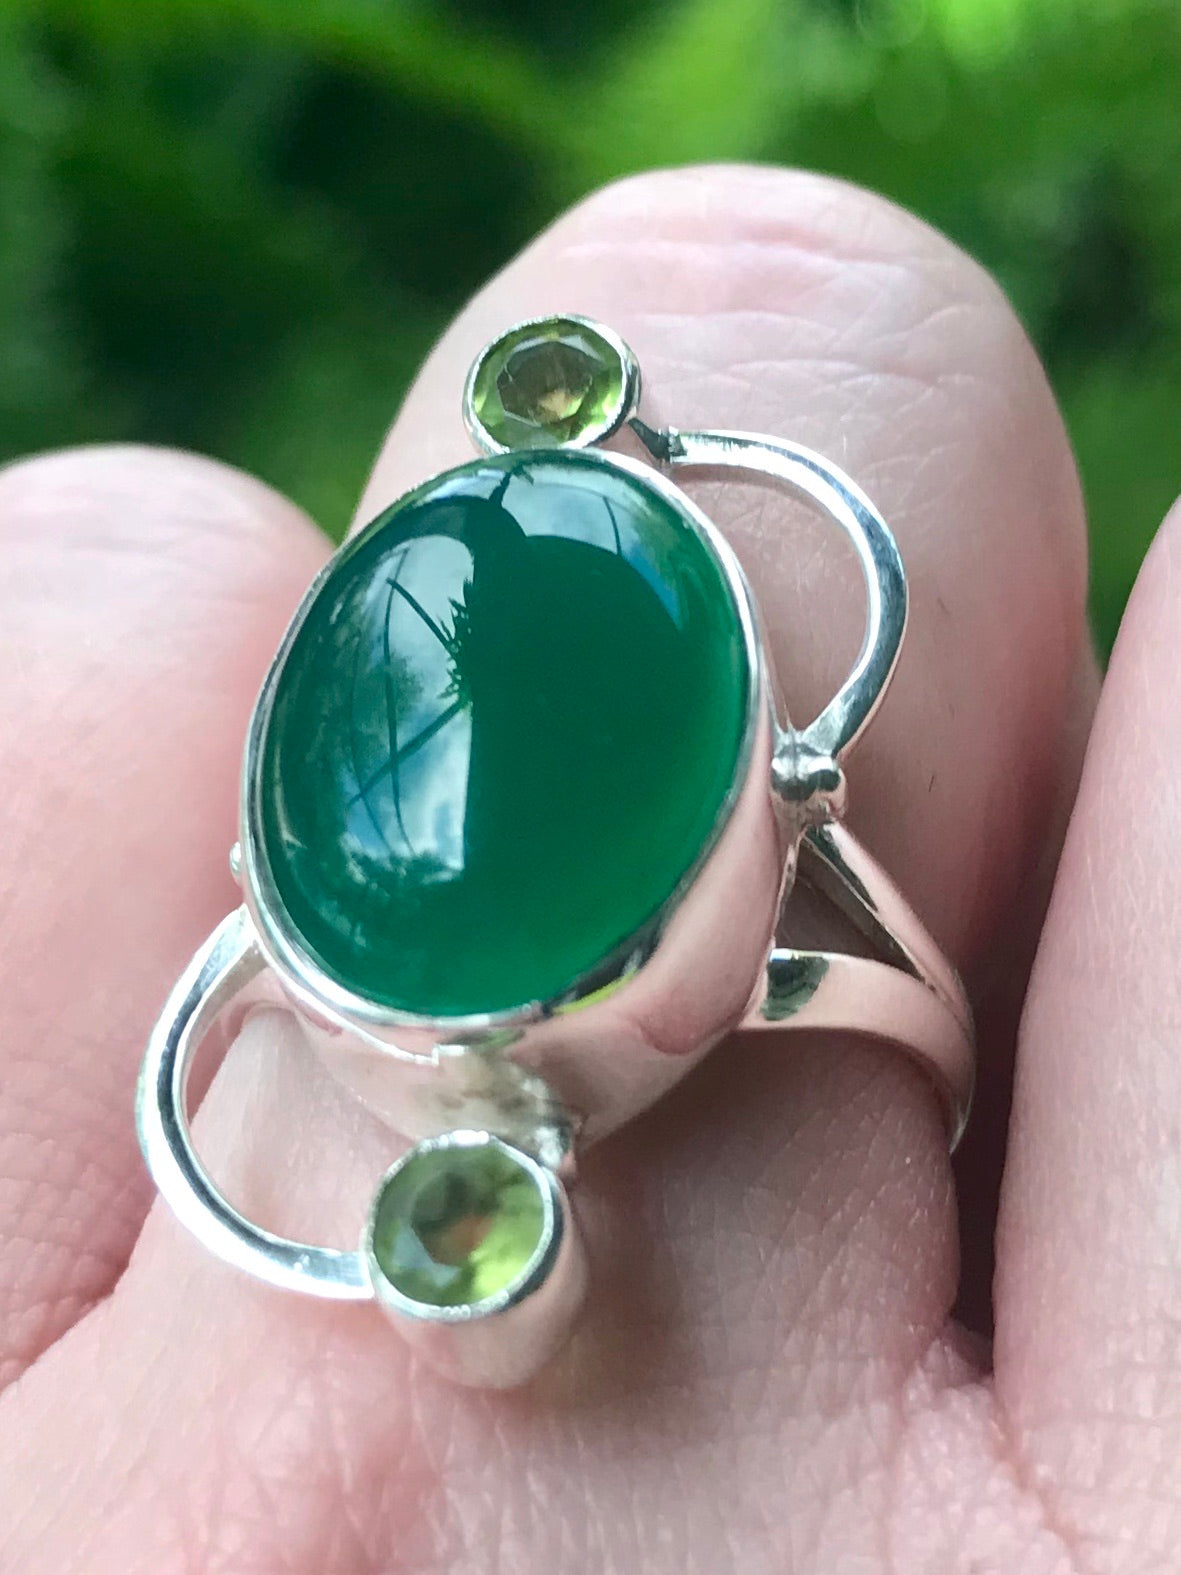 Green Onyx and Peridot Ring Size 8.25 - Morganna’s Treasures 